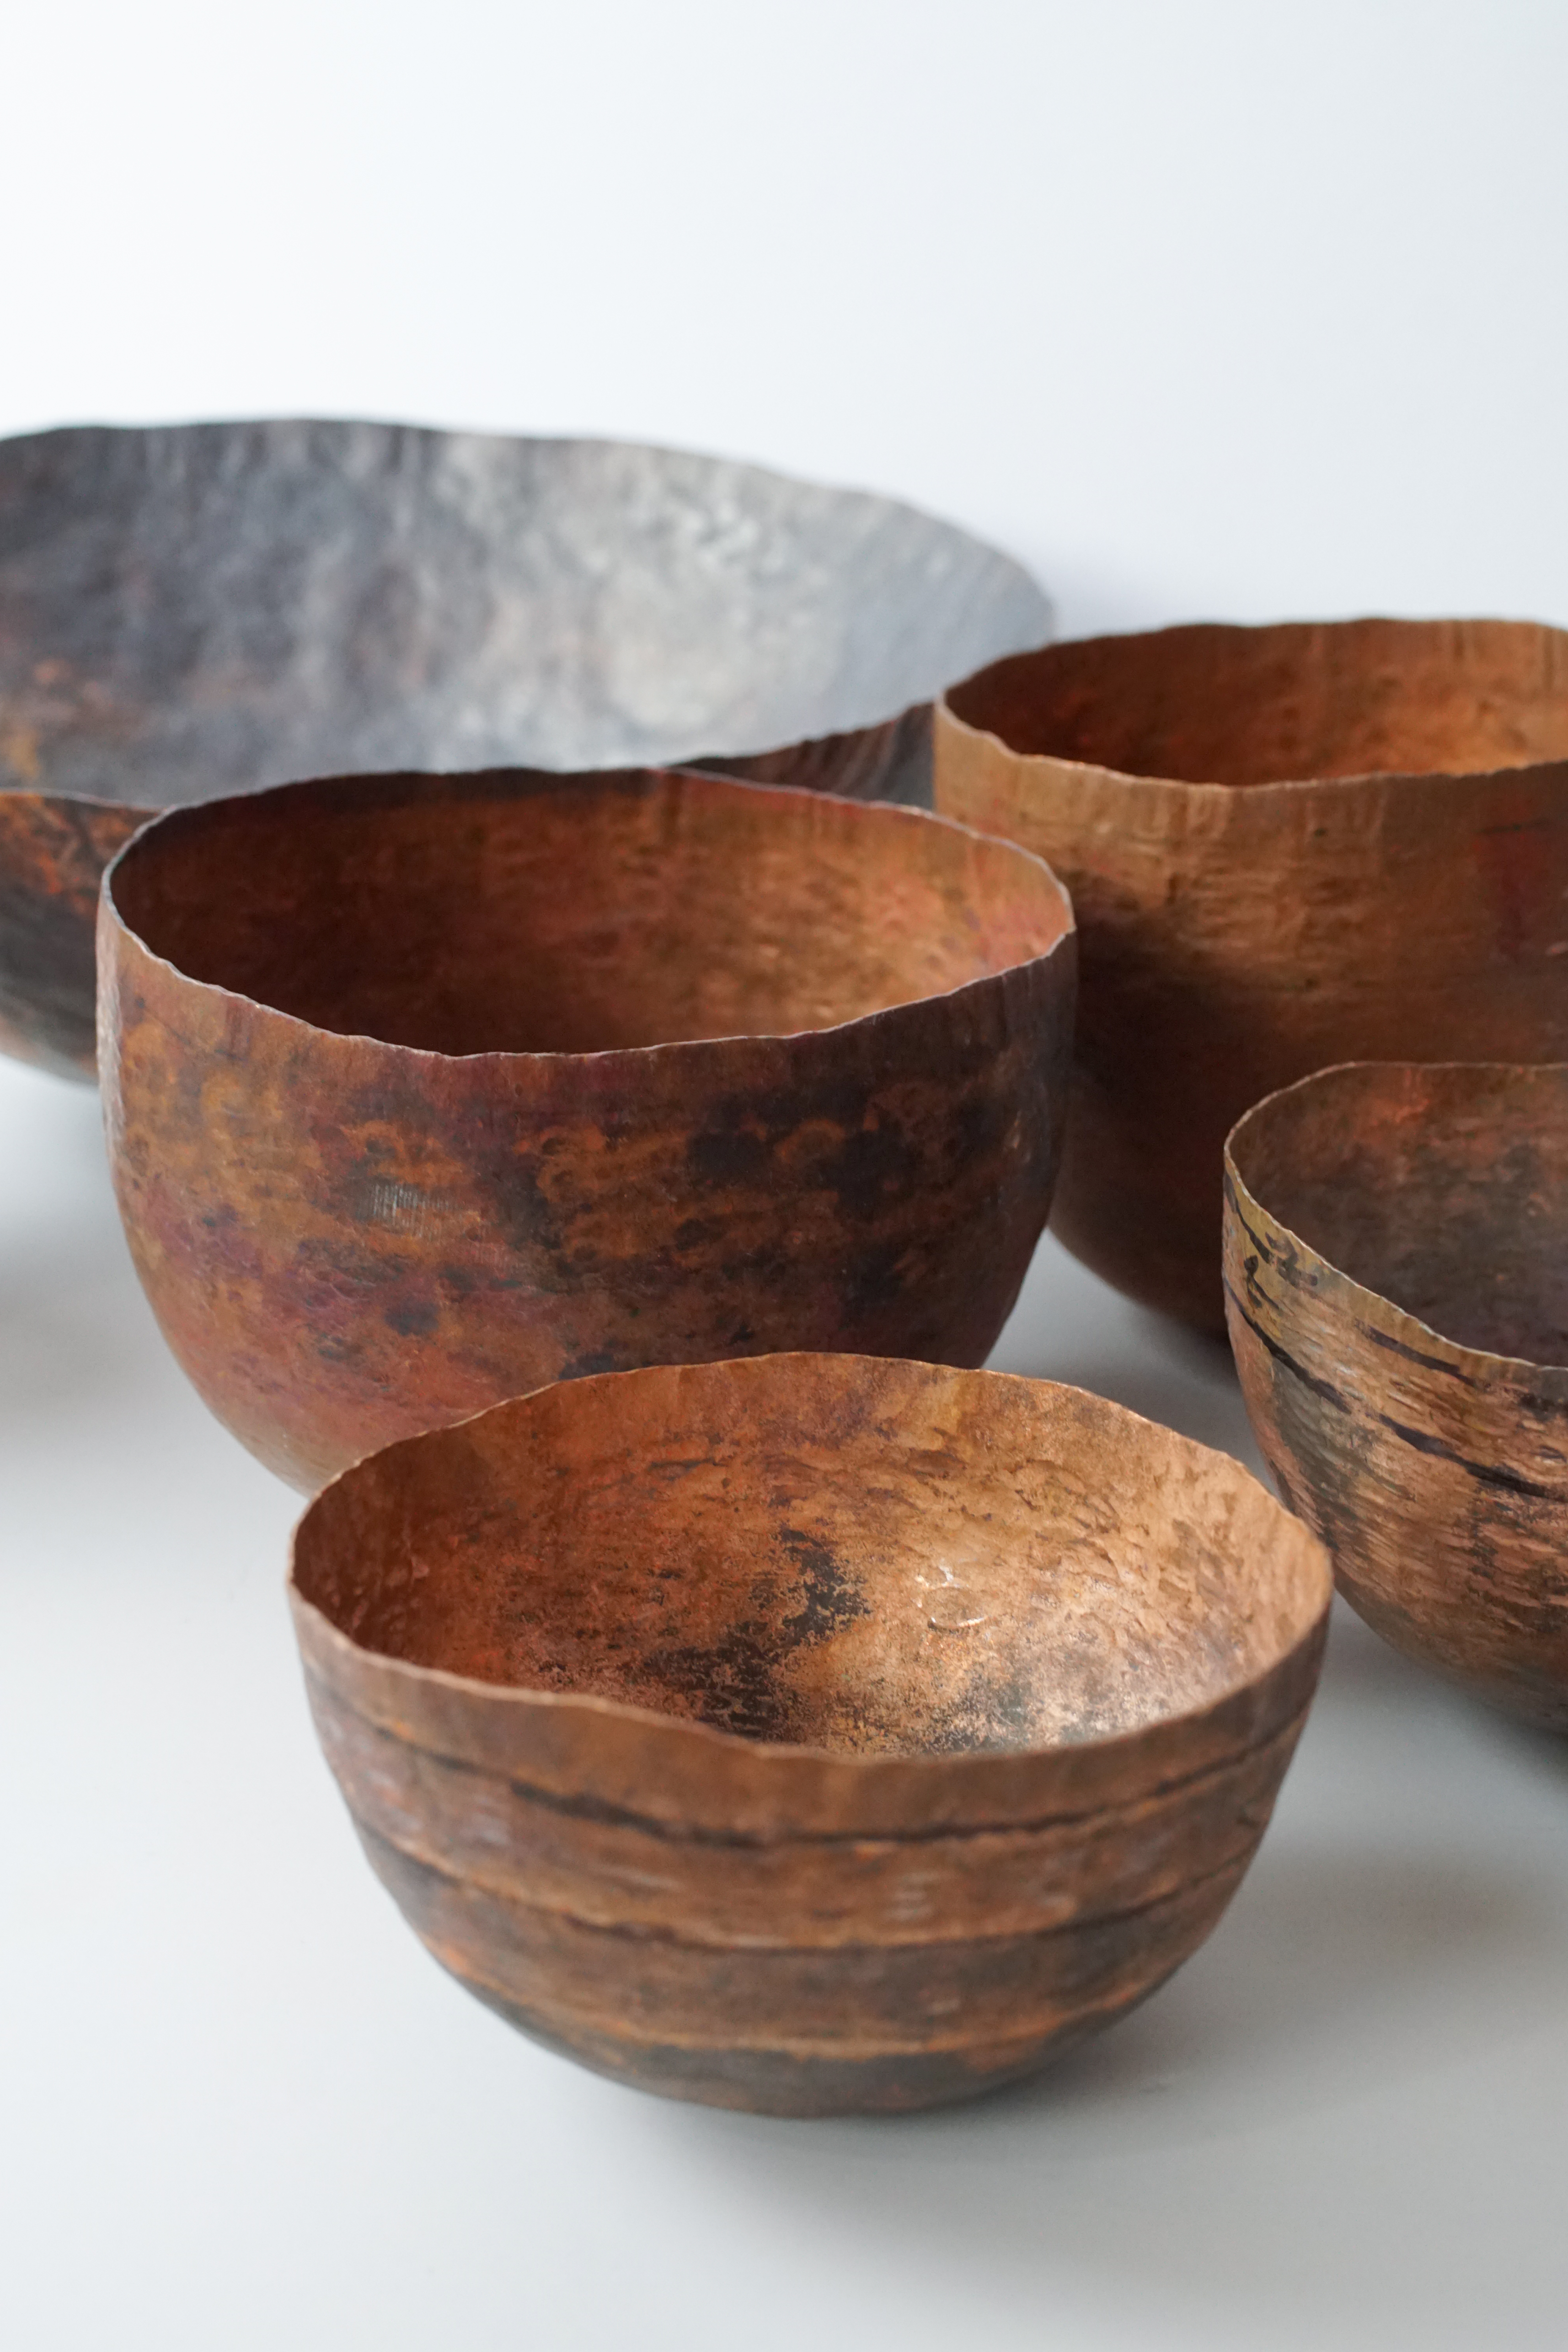 hammered copper bowls in progress